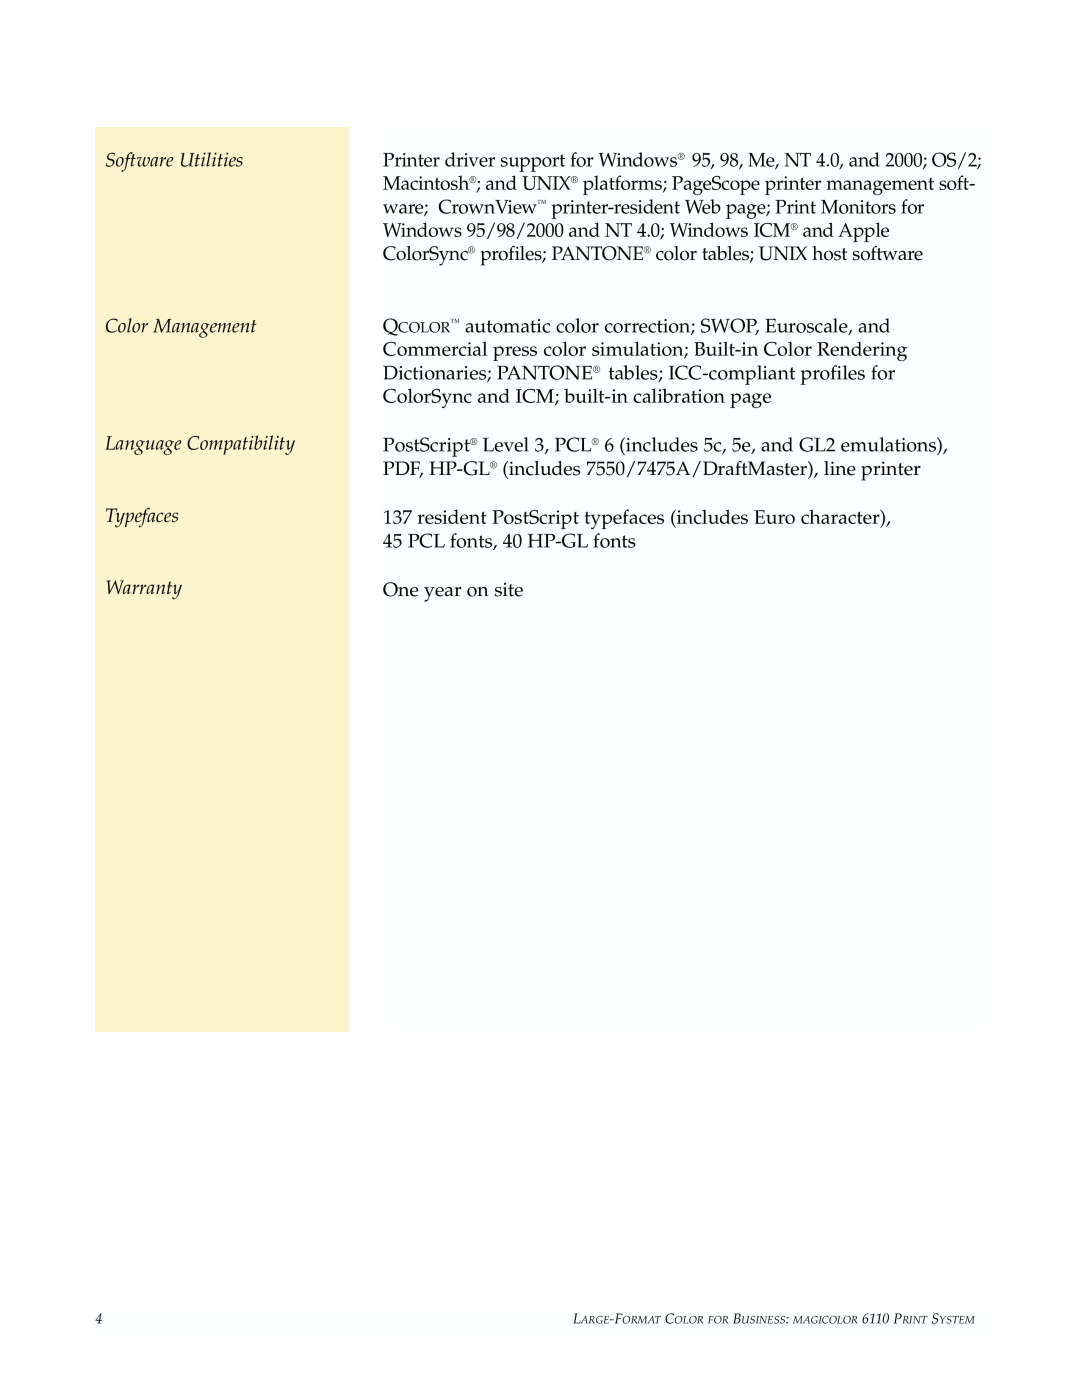 Minolta 6110 manual Software Utilities Color Management Language Compatibility Typefaces, Warranty 